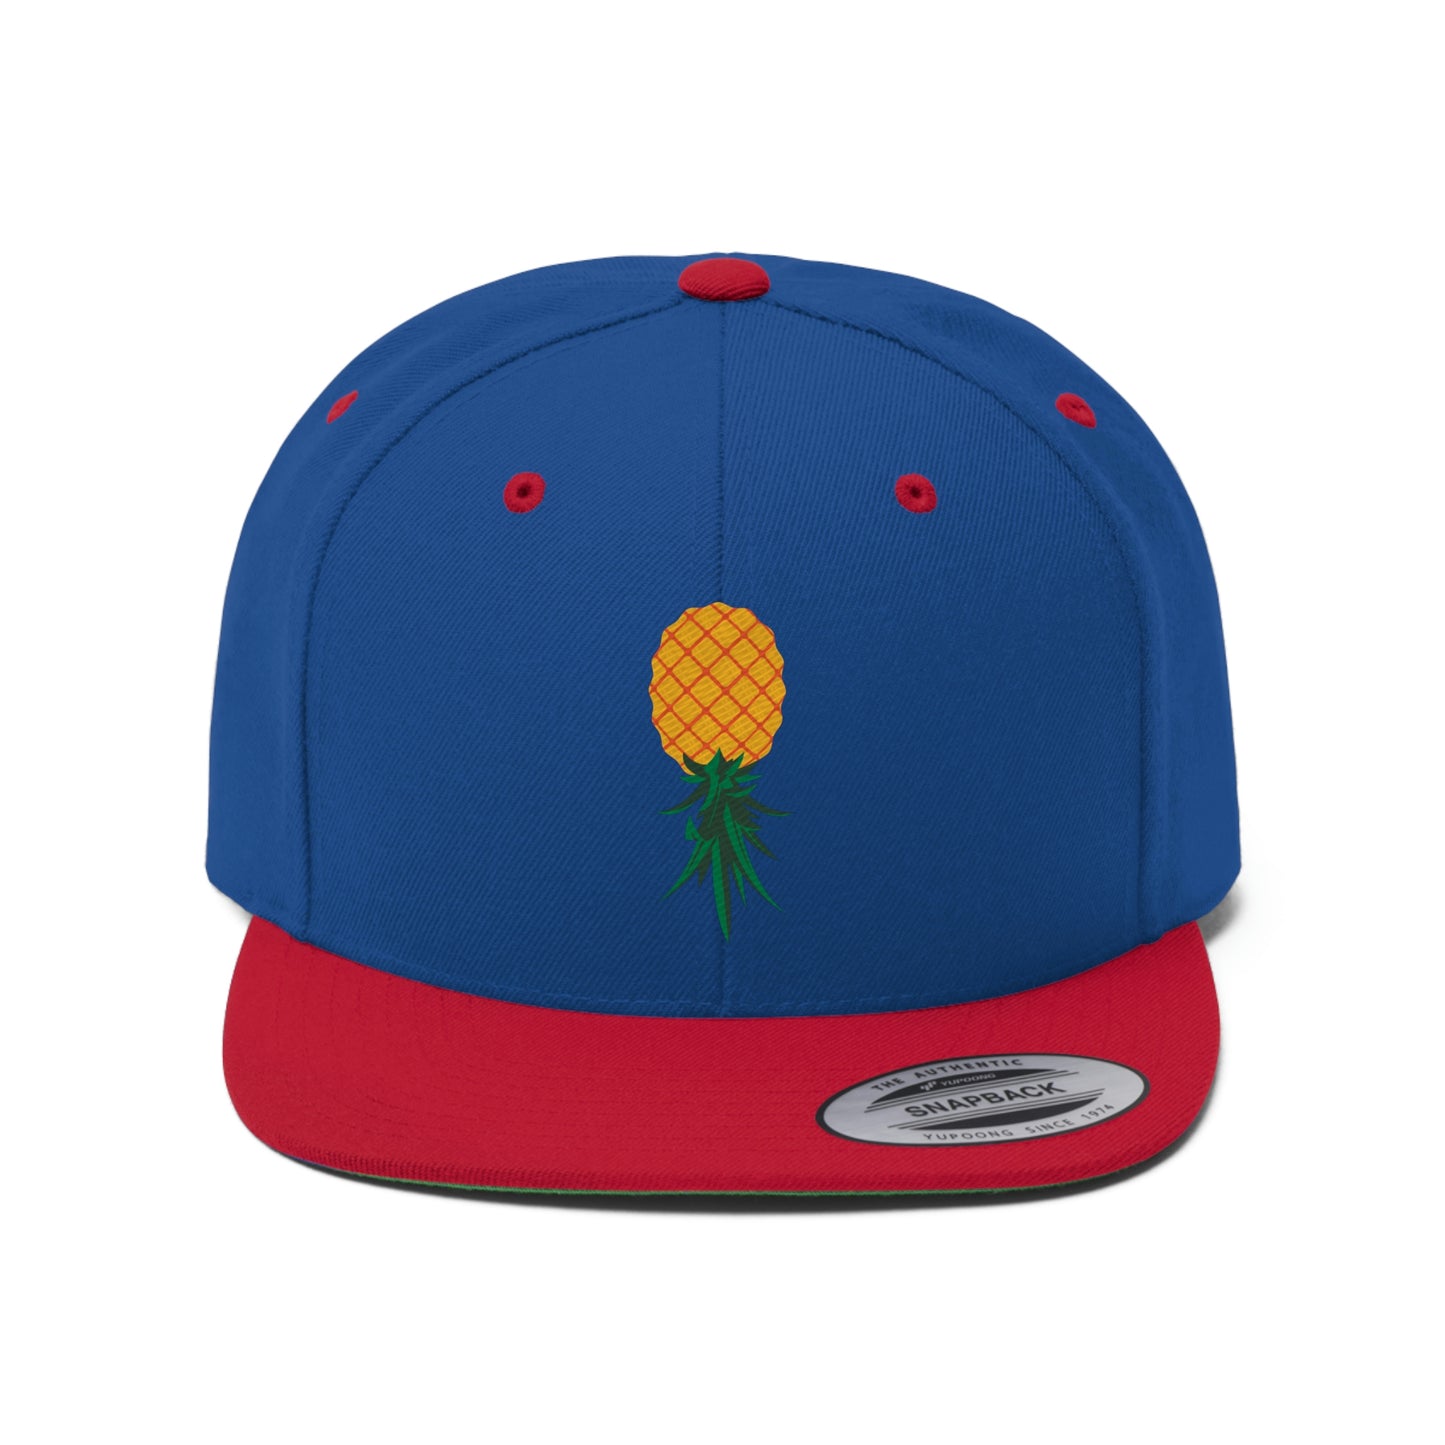 Upside Down Pineapple, Why Not–Unisex Flat Bill Hat